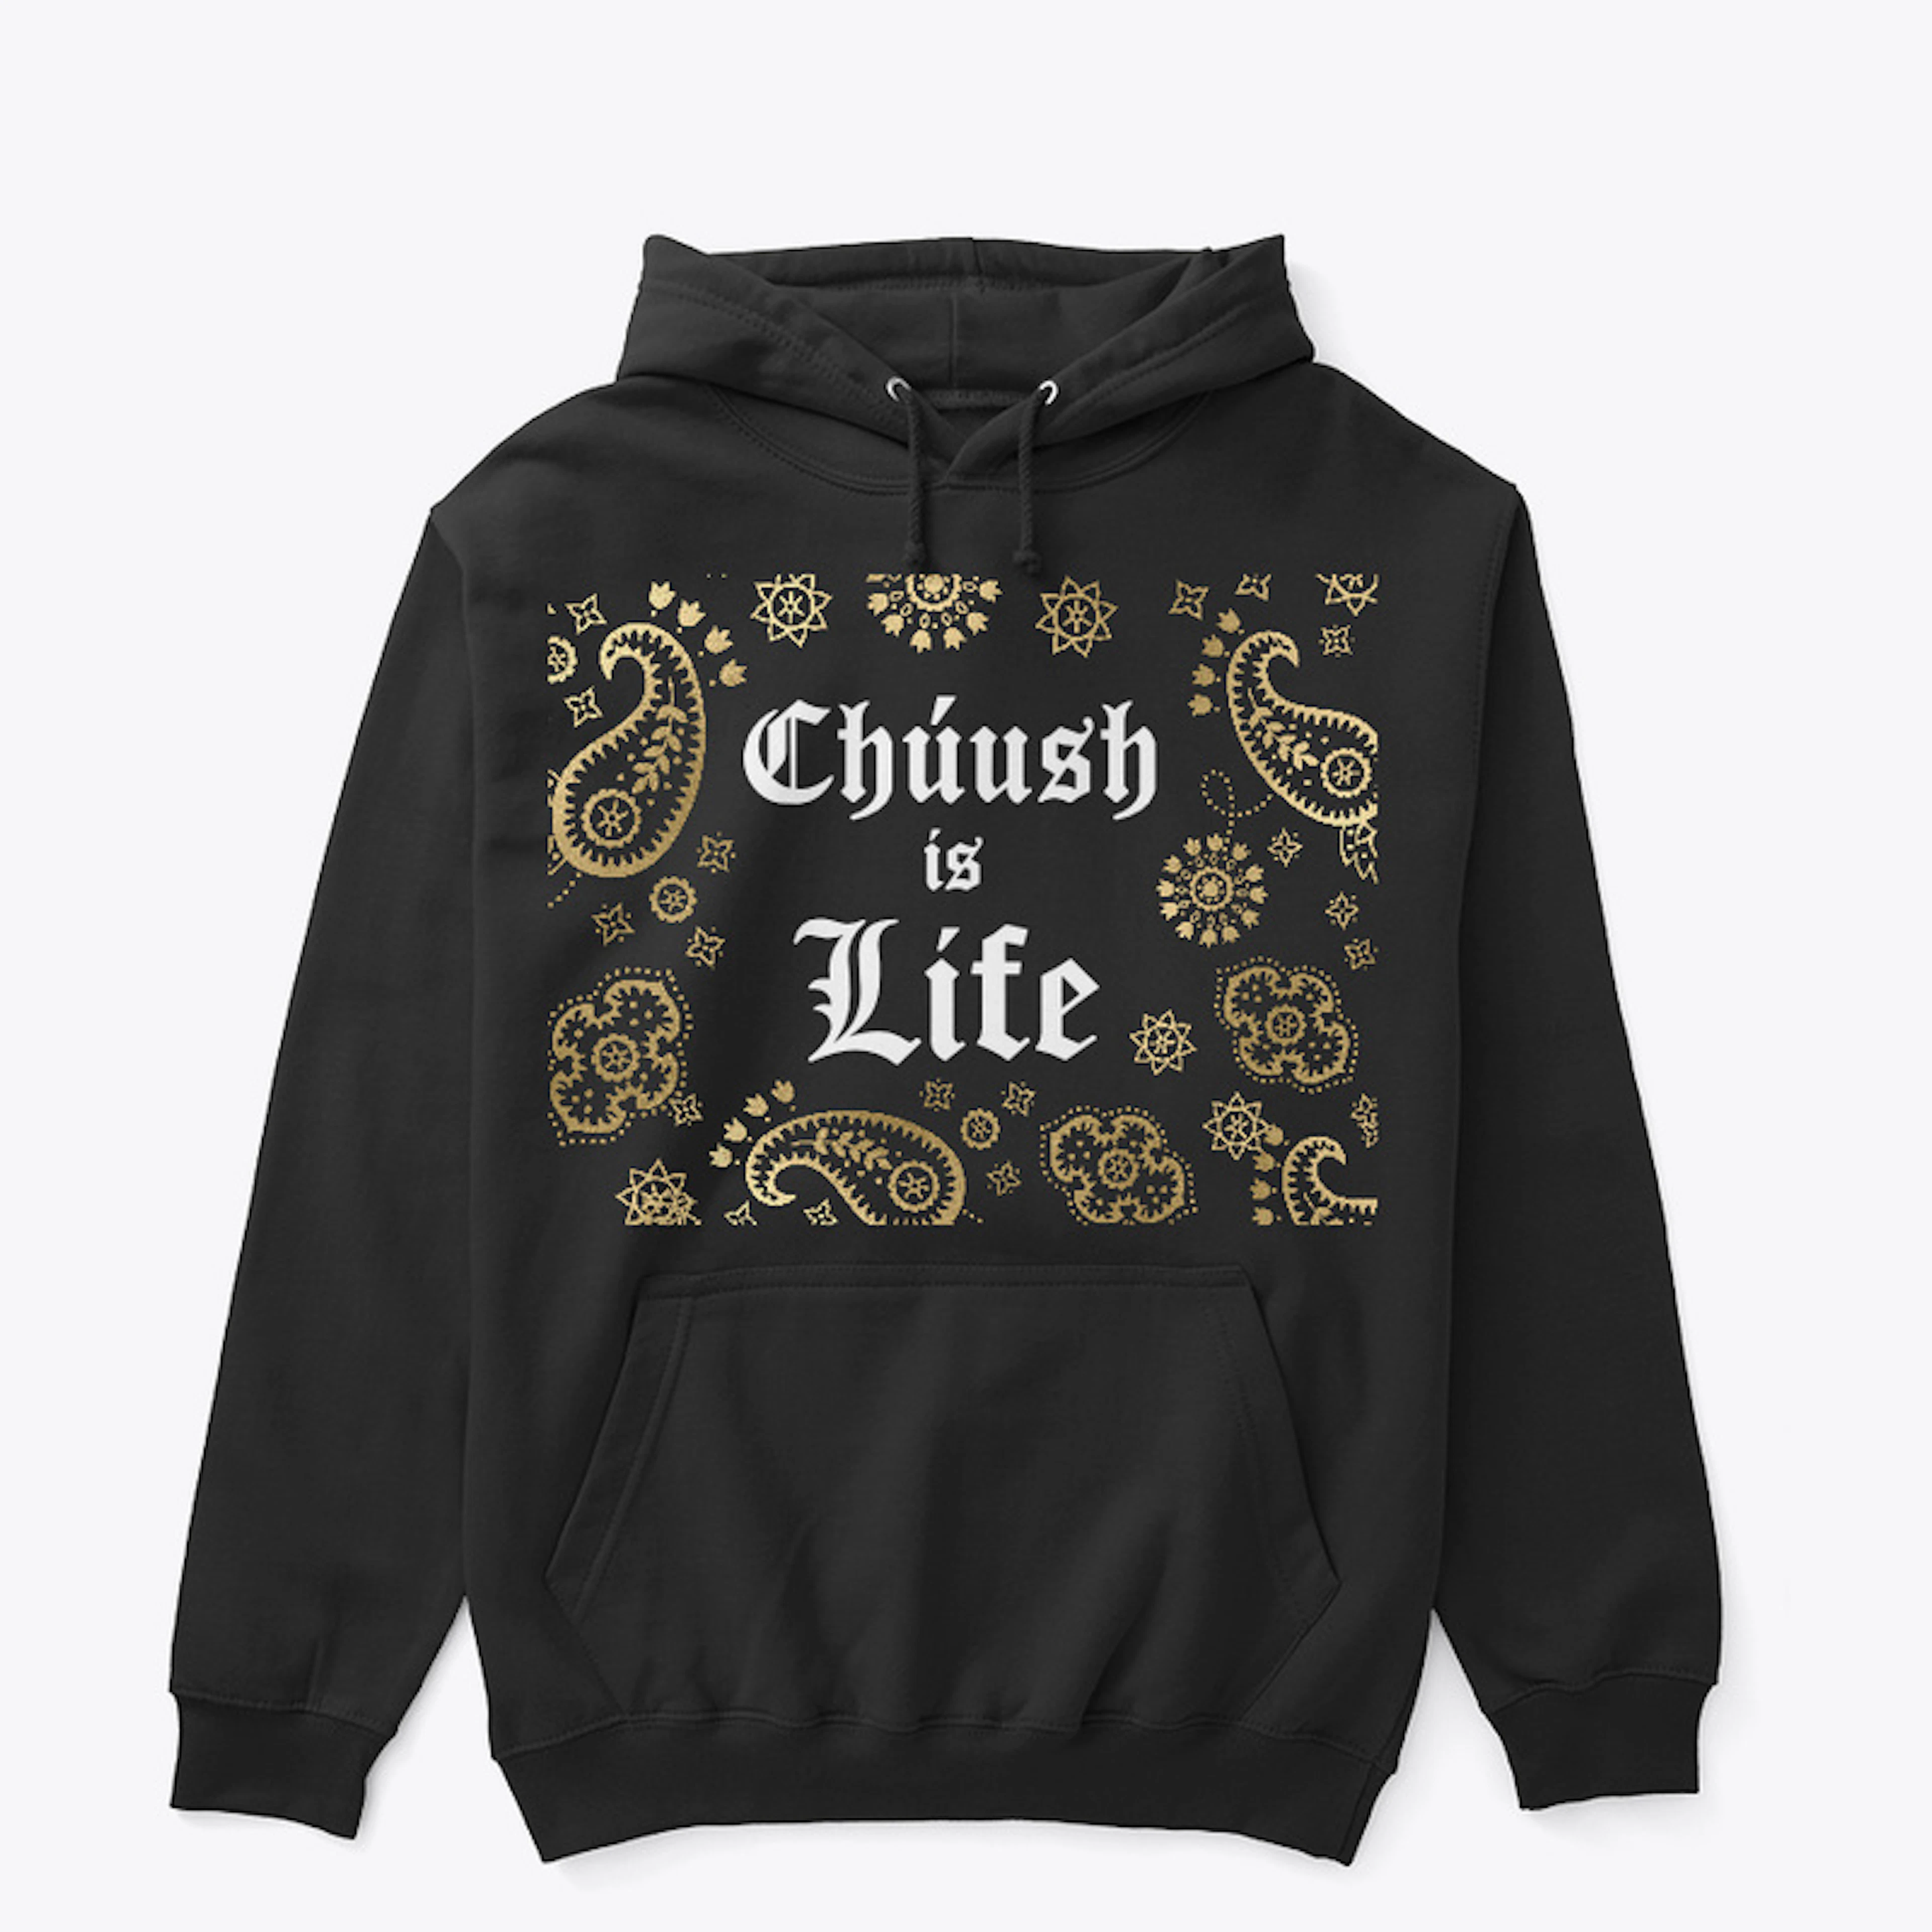 Chúush (Water) is Life Hoodie